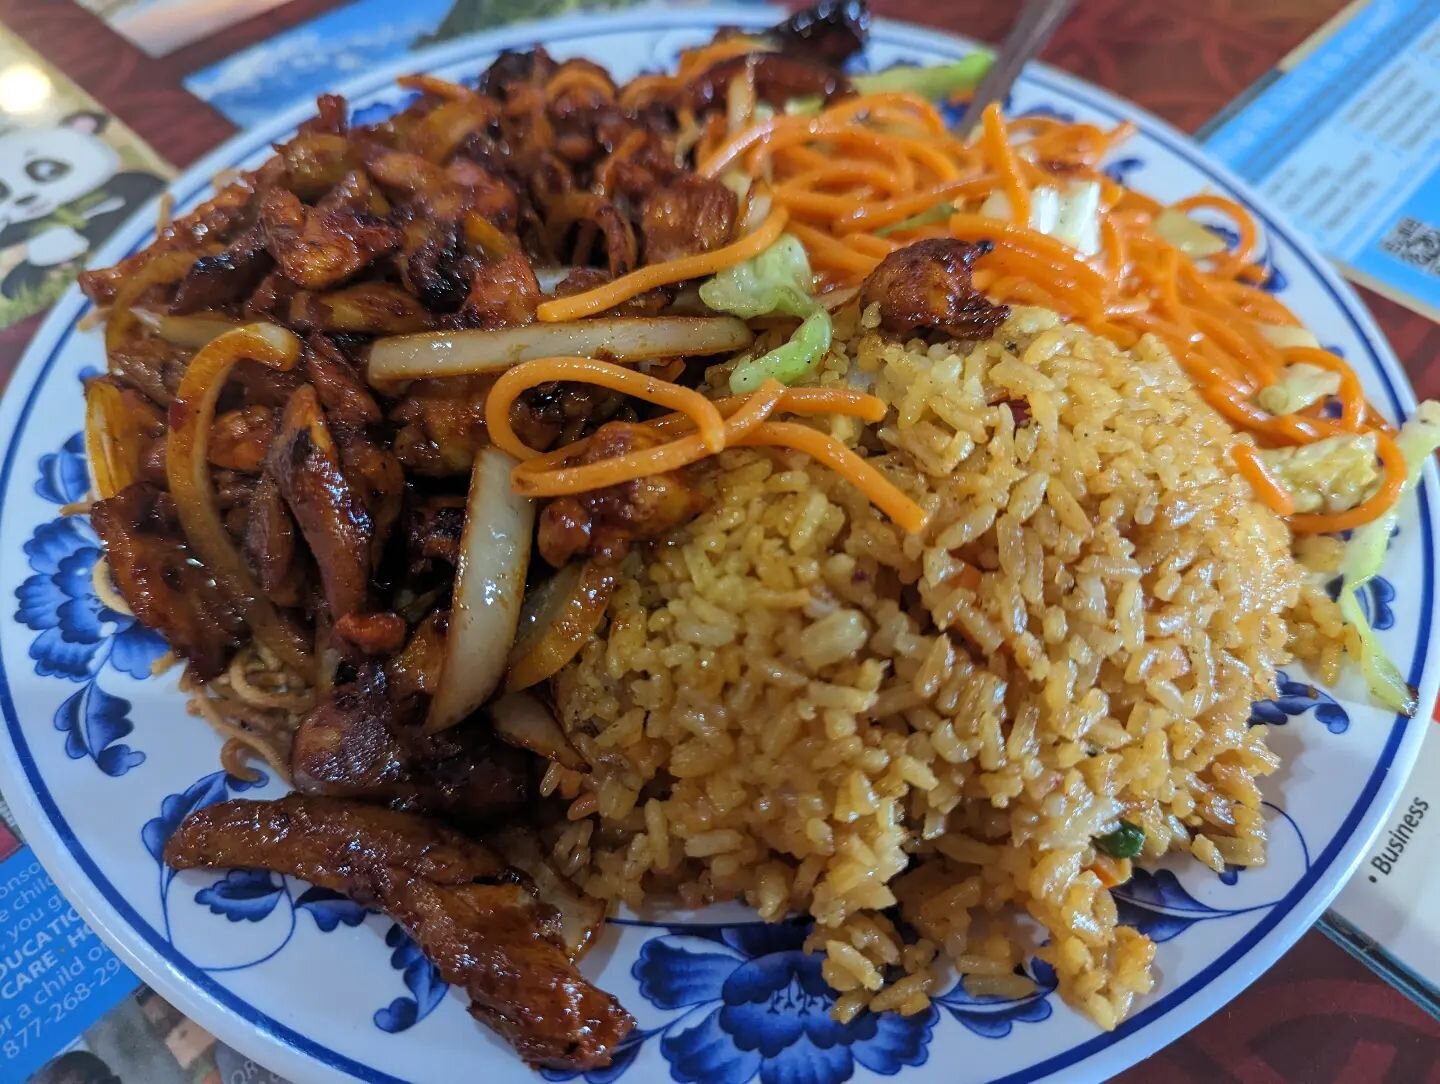 Combo M with Mongolian chicken!

#luckychineserestaurant #elcentroca #eatlocal #food #foodporn #chinesefood #yum #smallbusiness #comidachina #localbusiness #localbusinesselcentro